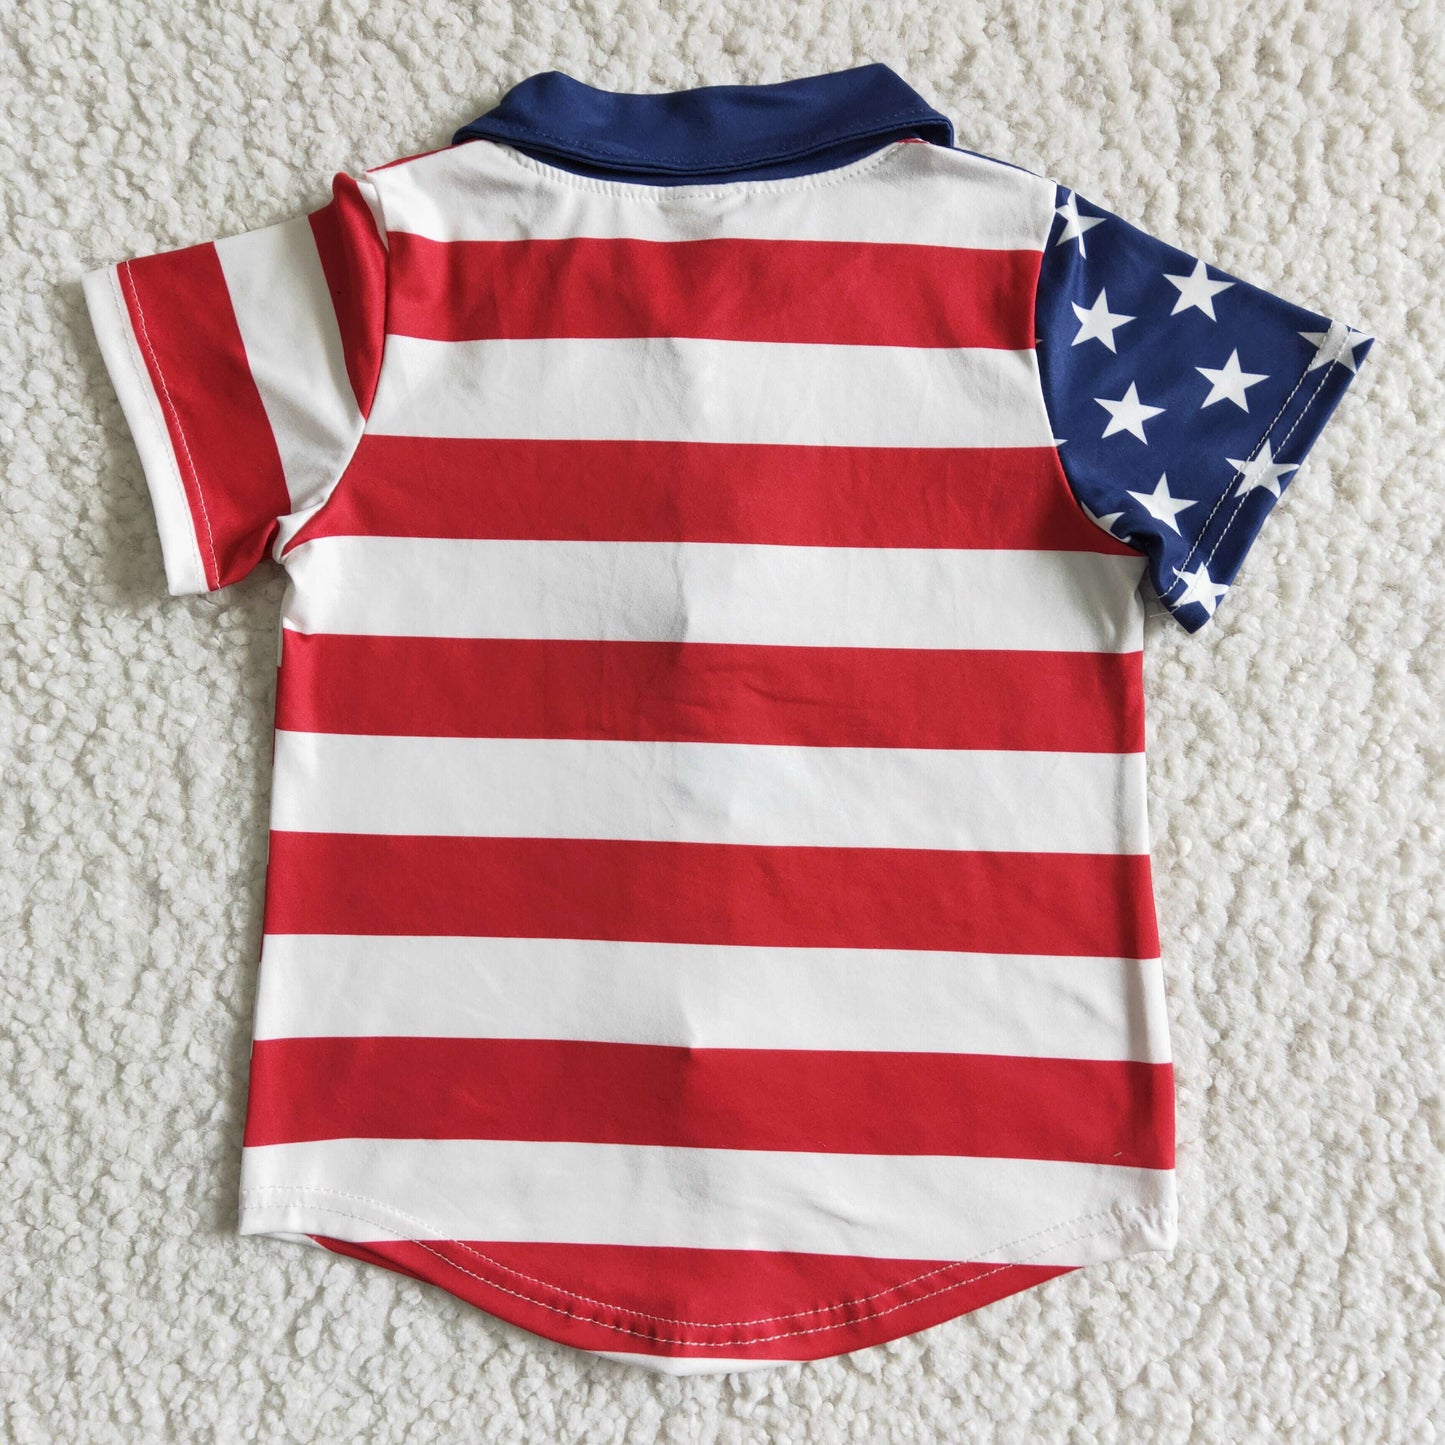 kids clothing USA flag shirt boy